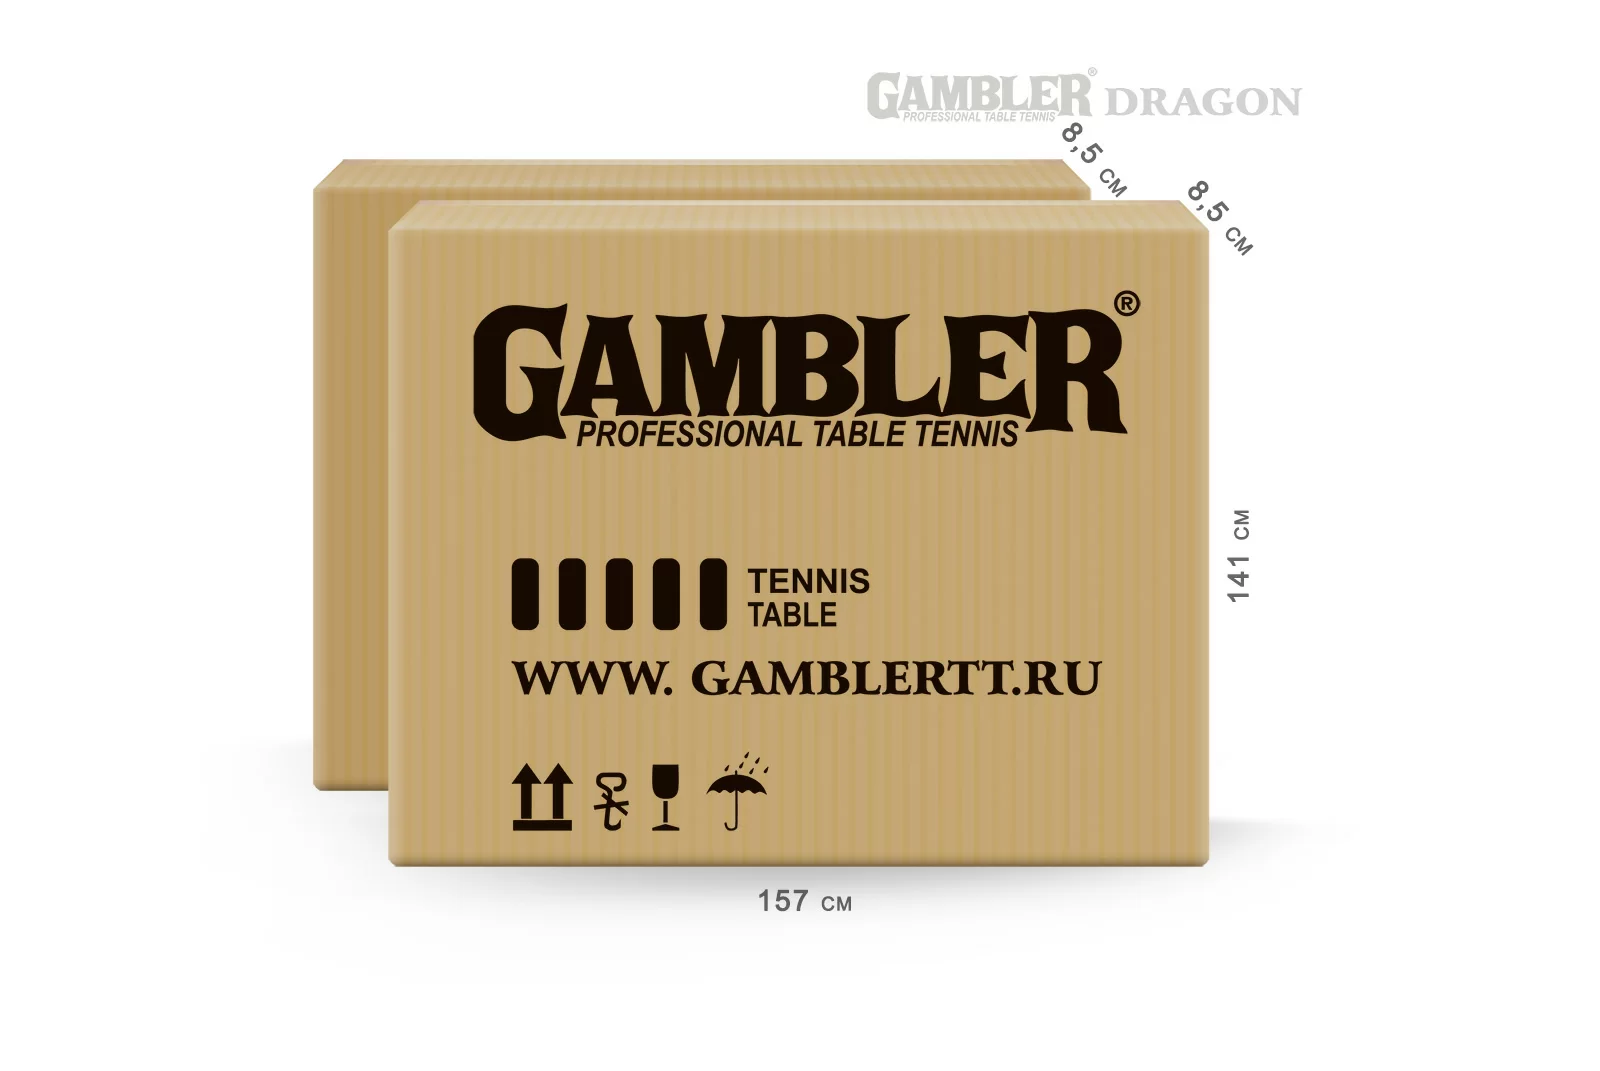 Реальное фото GAMBLER DRAGON GREEN от магазина СпортЕВ